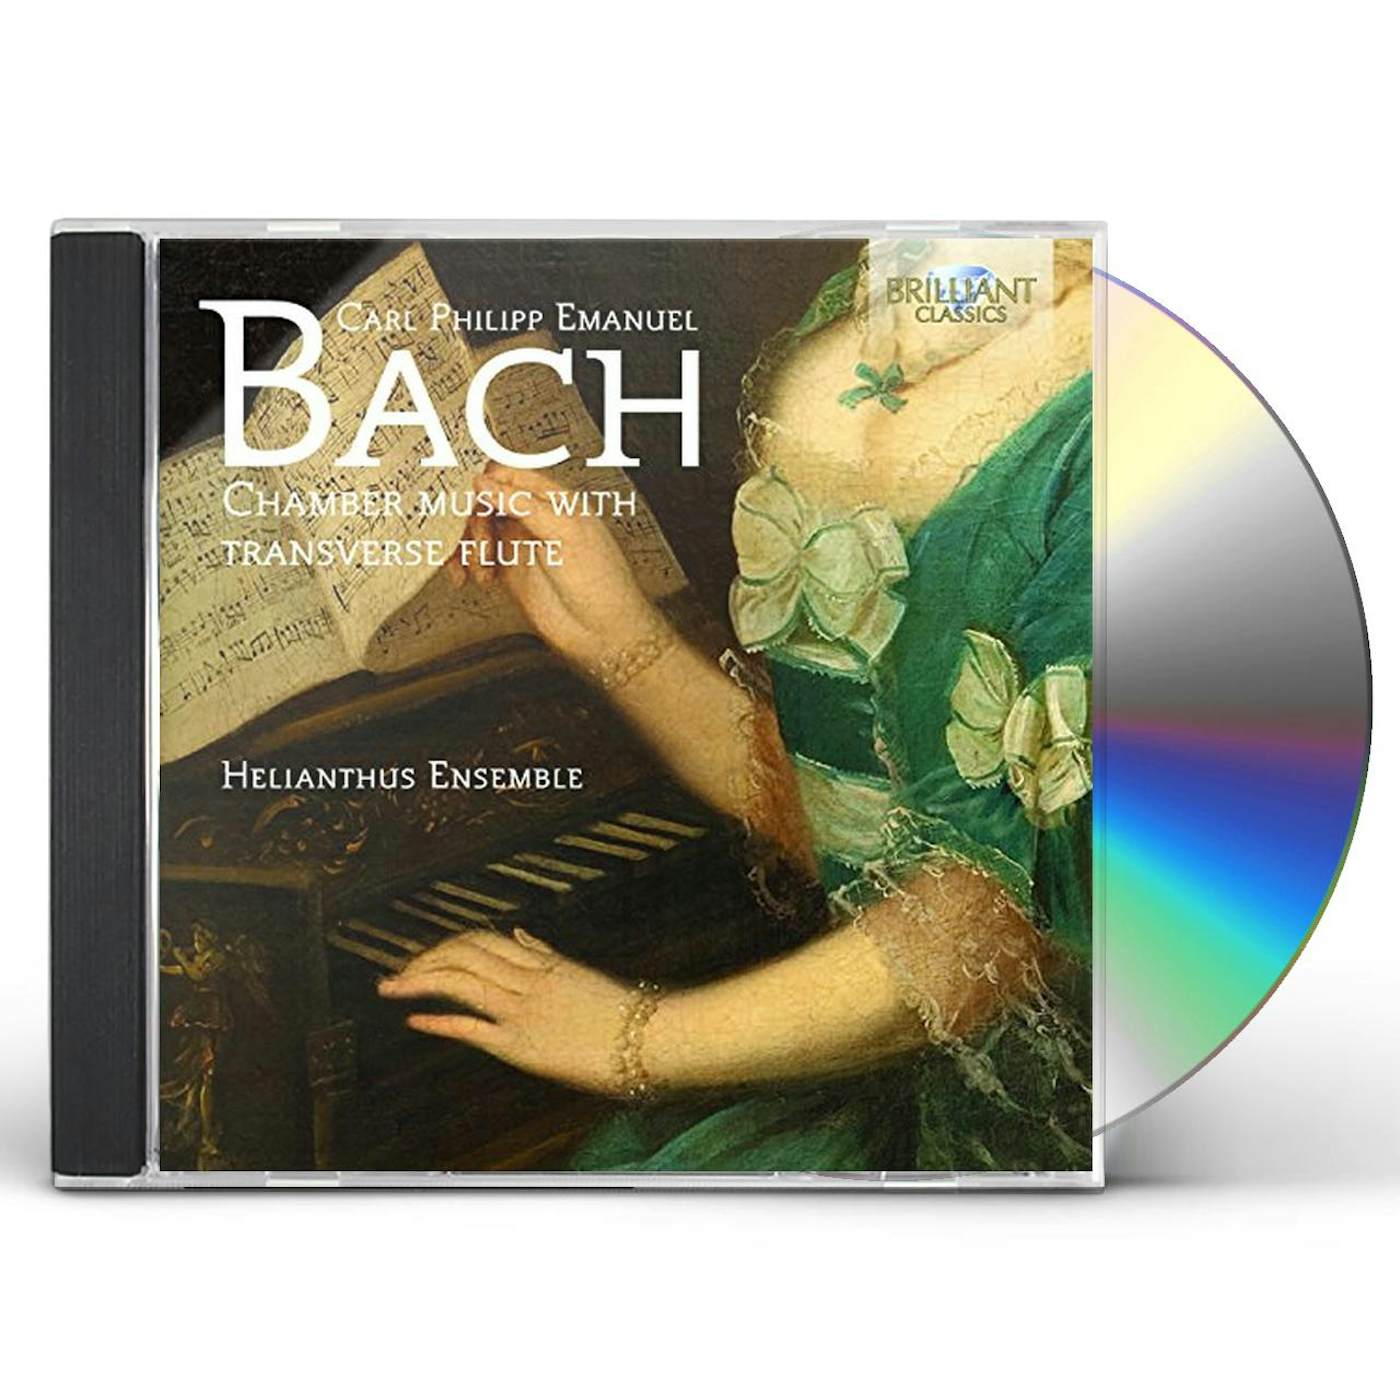 Johann Sebastian Bach CHAMBER MUSIC WITH TRANSVERSE FLUTE CD